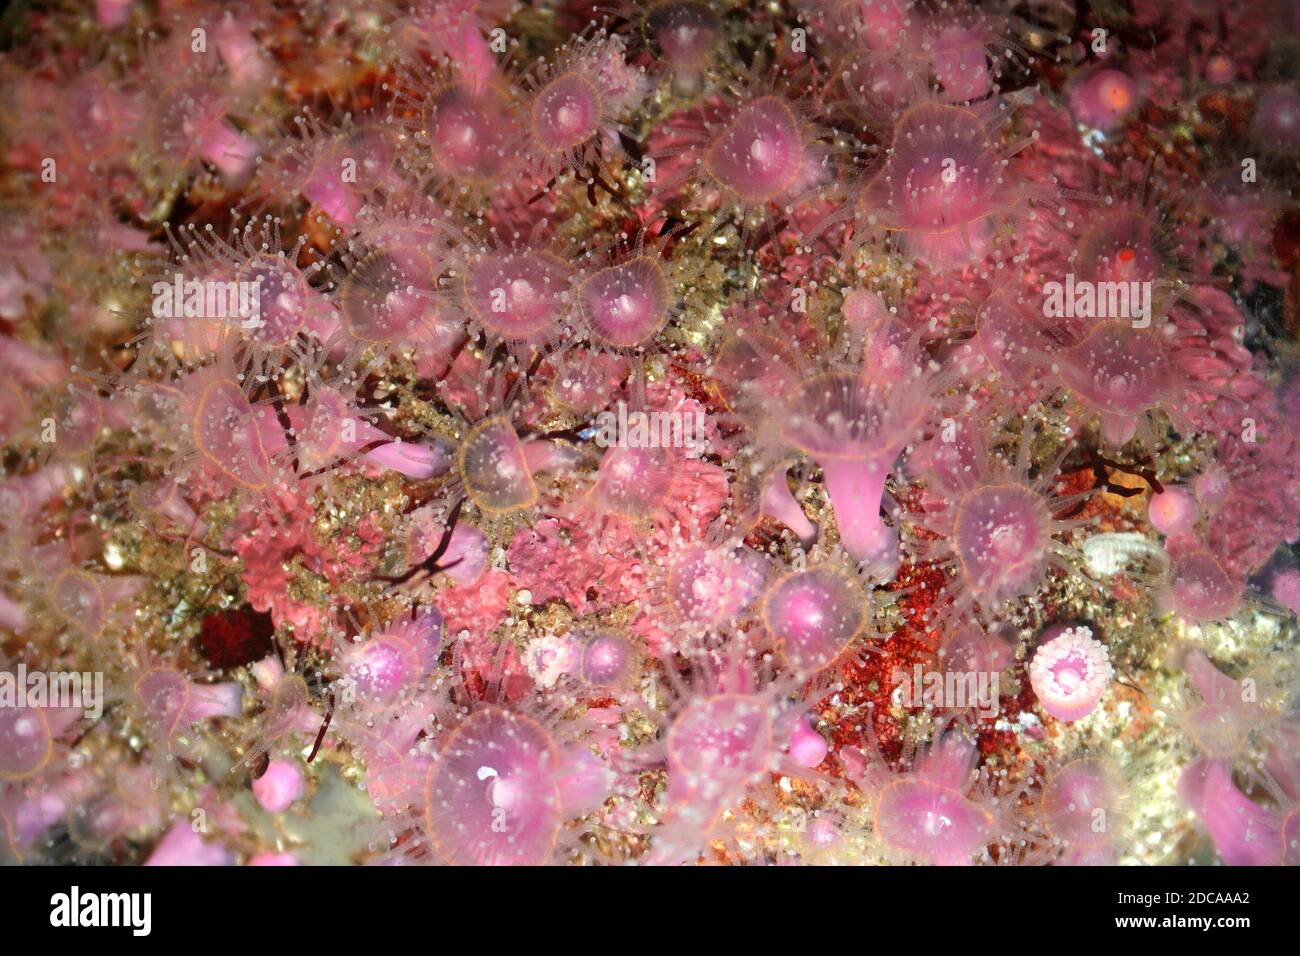 Erdbeeranemone Corynactis annulata Stockfoto